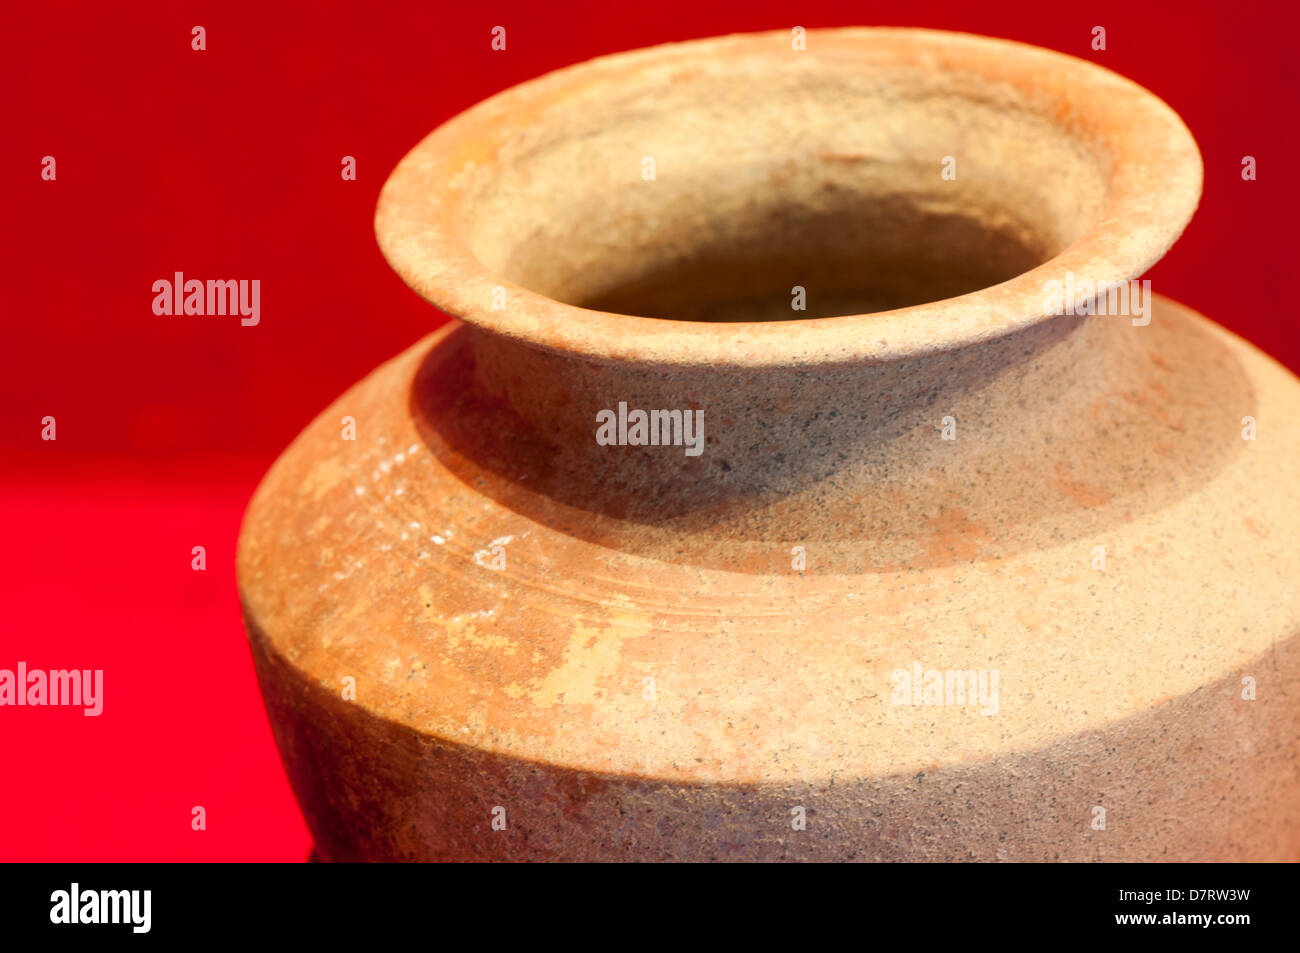 Handmade, Earthenware Clay Vase, Home Decoration Antique Piece , Tradi –  Clay Handi Store